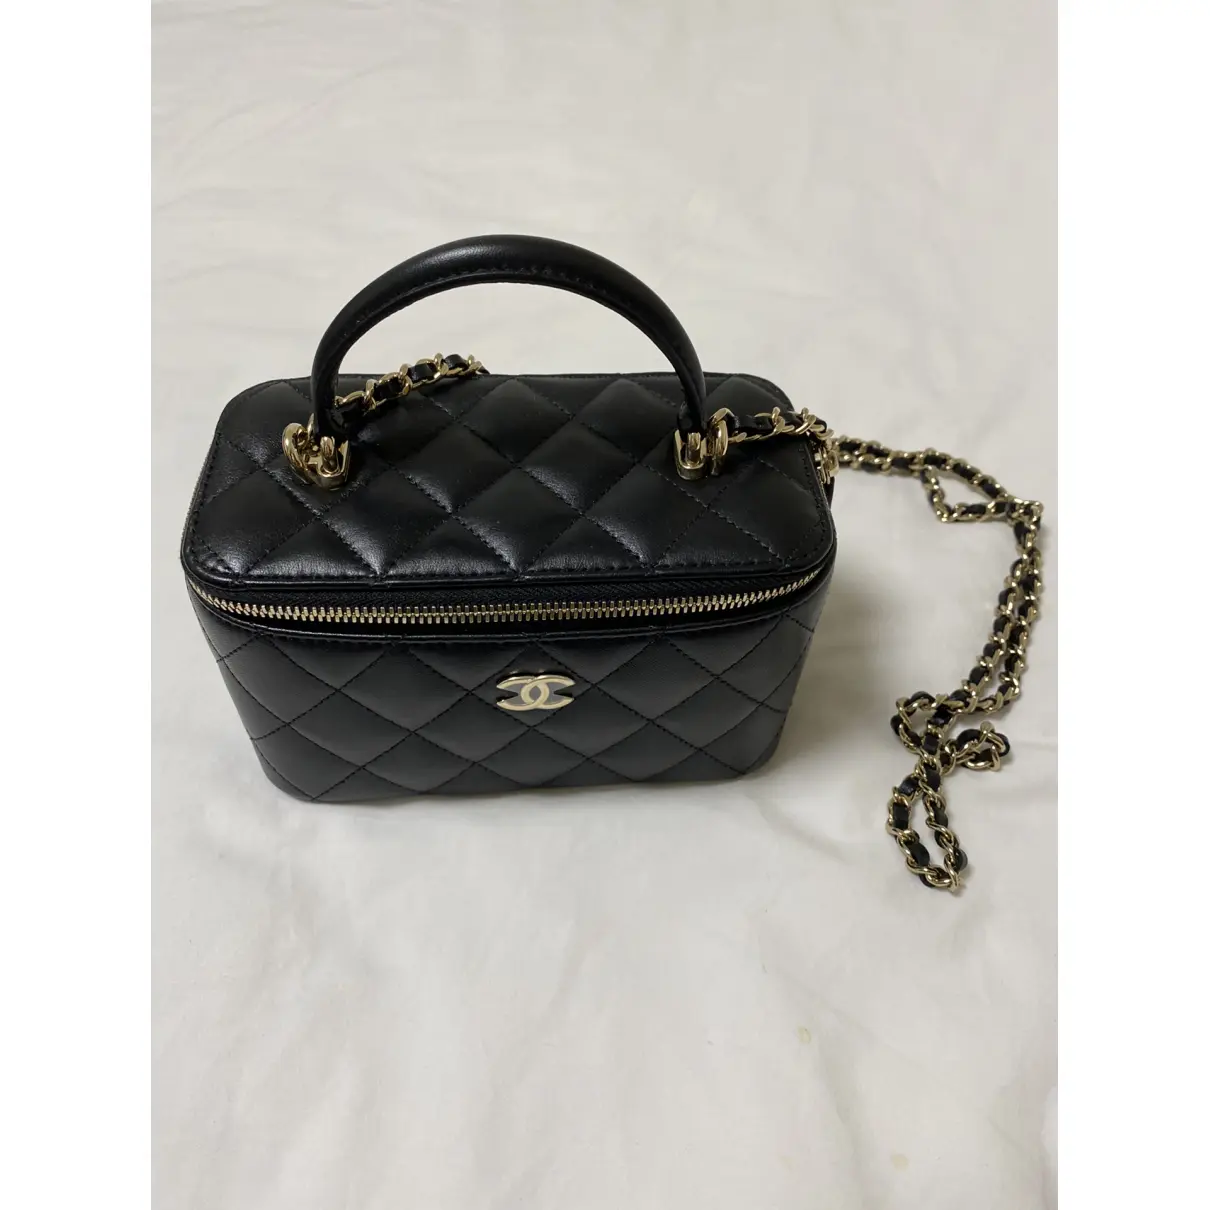 Buy Chanel Trendy CC Vanity leather handbag online